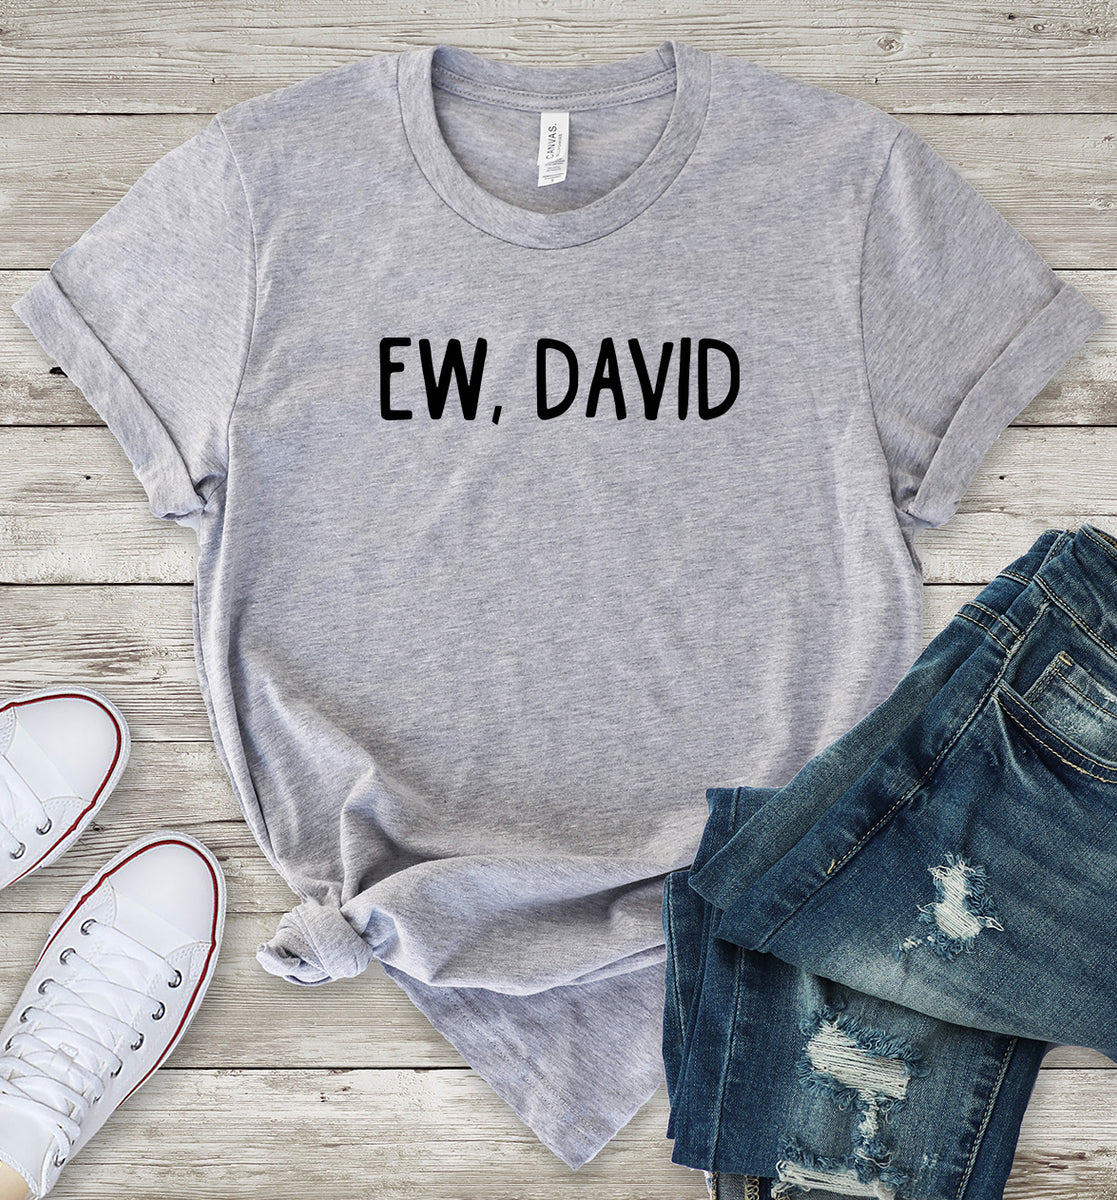 Ew, David (Schitt's Creek Quote) T-Shirt